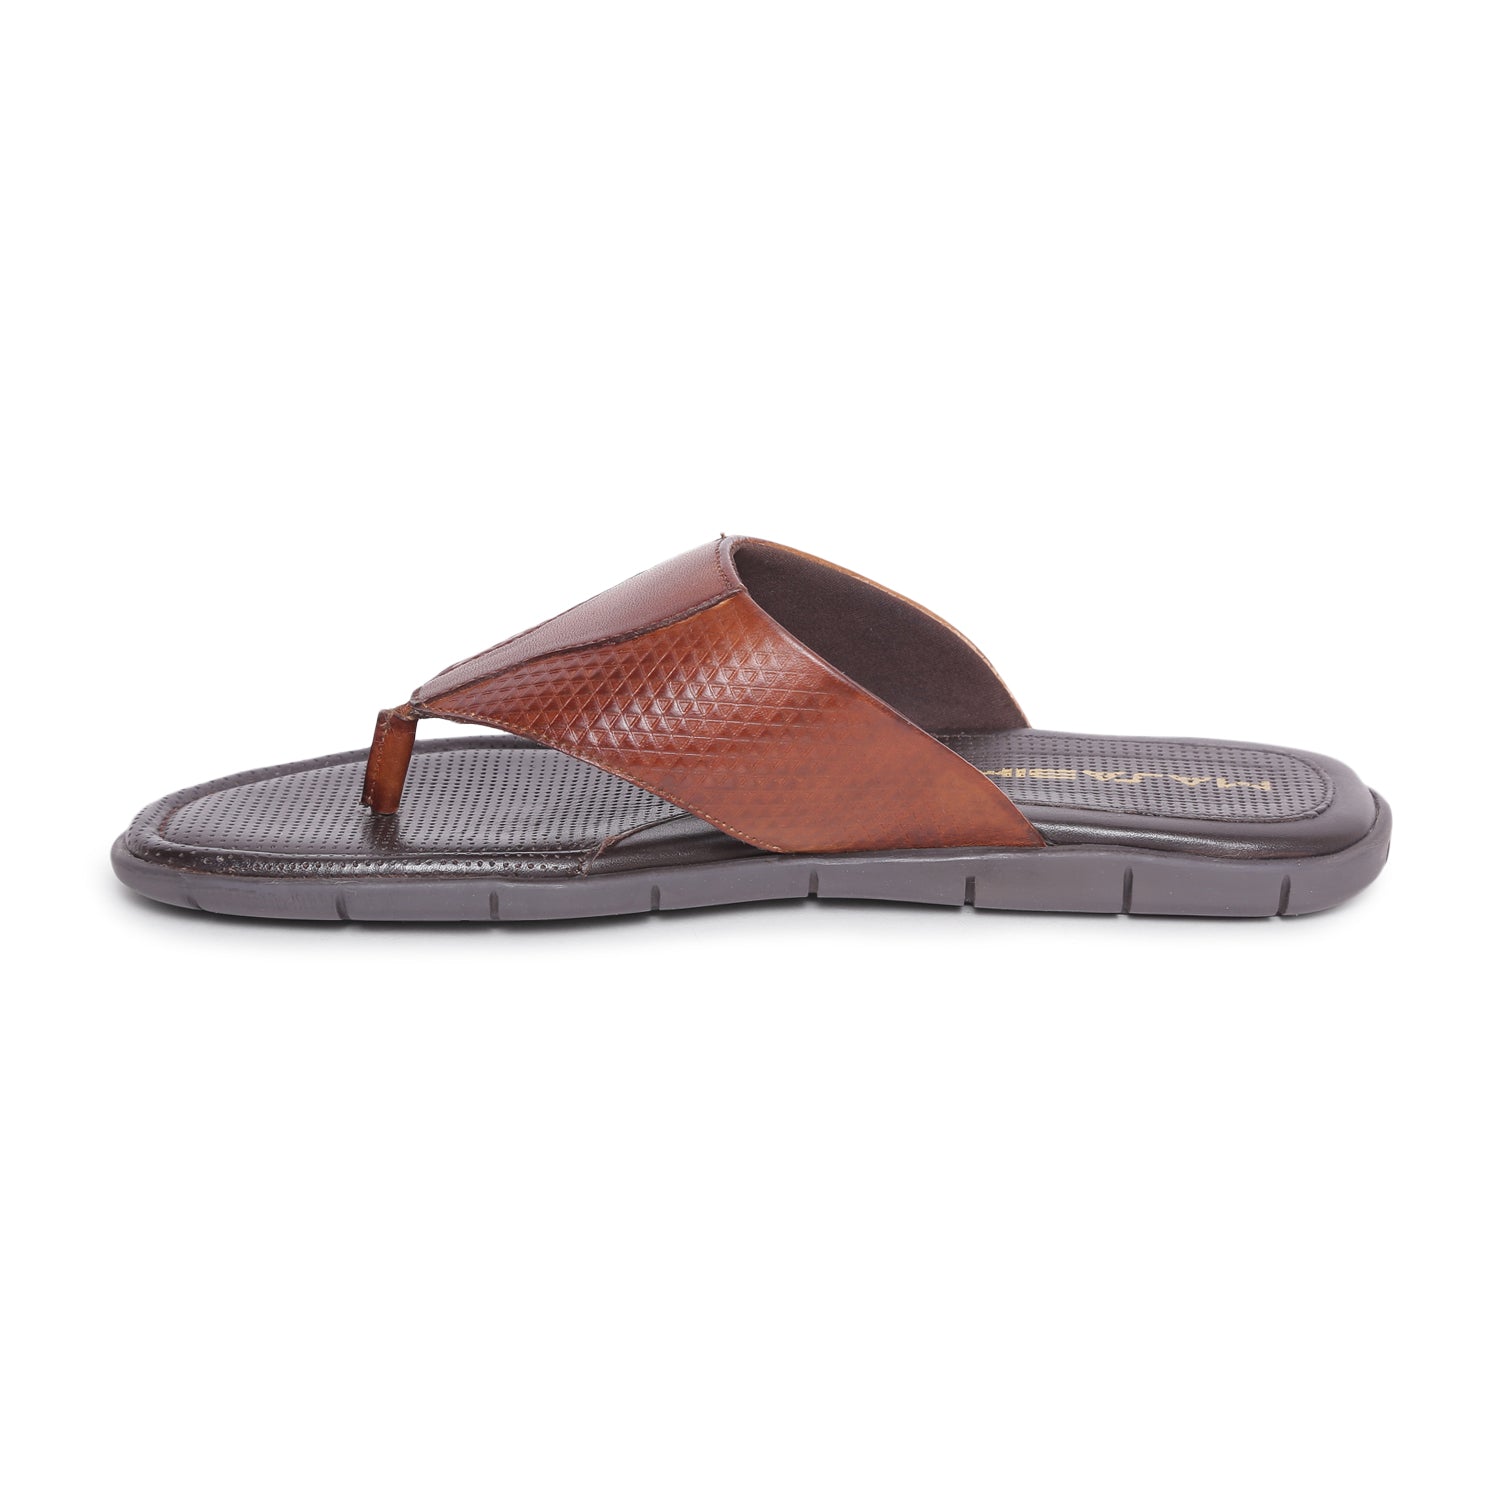 MASABIH Geniune Leather Soft Hexa Print Tan Color modern thong sandals for Mens